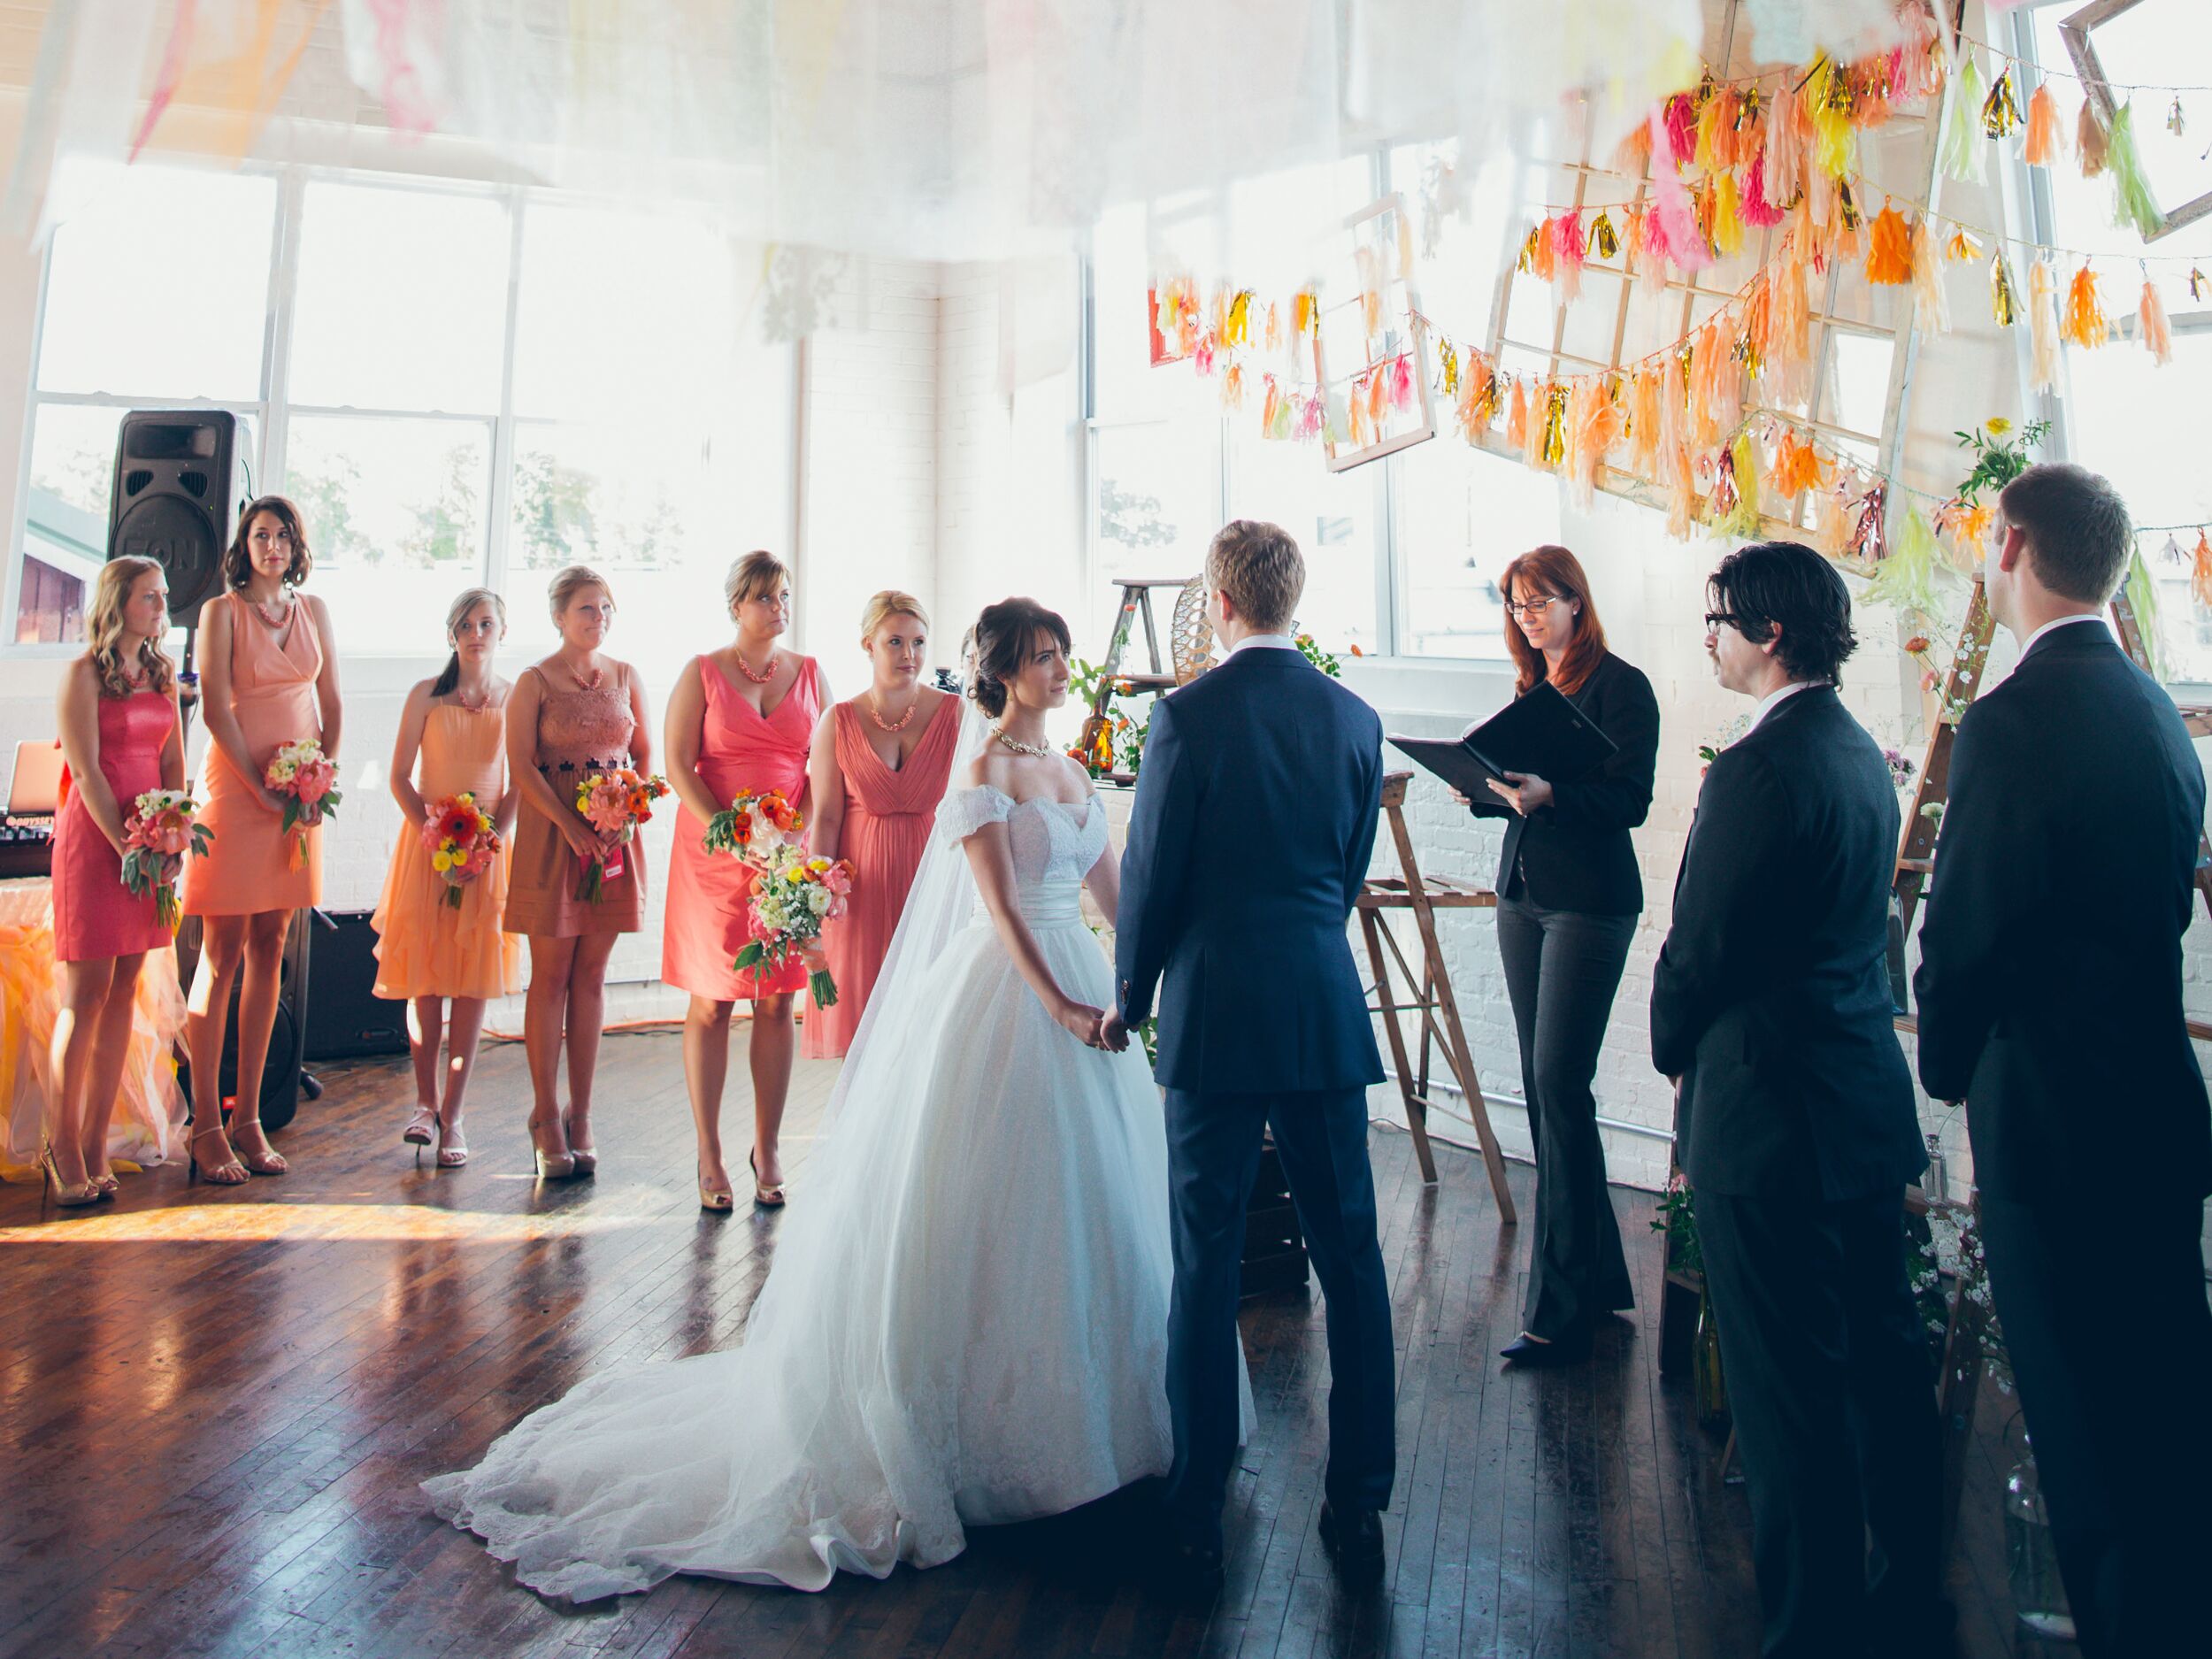 Vow exchange ceremony at bright DIY wedding